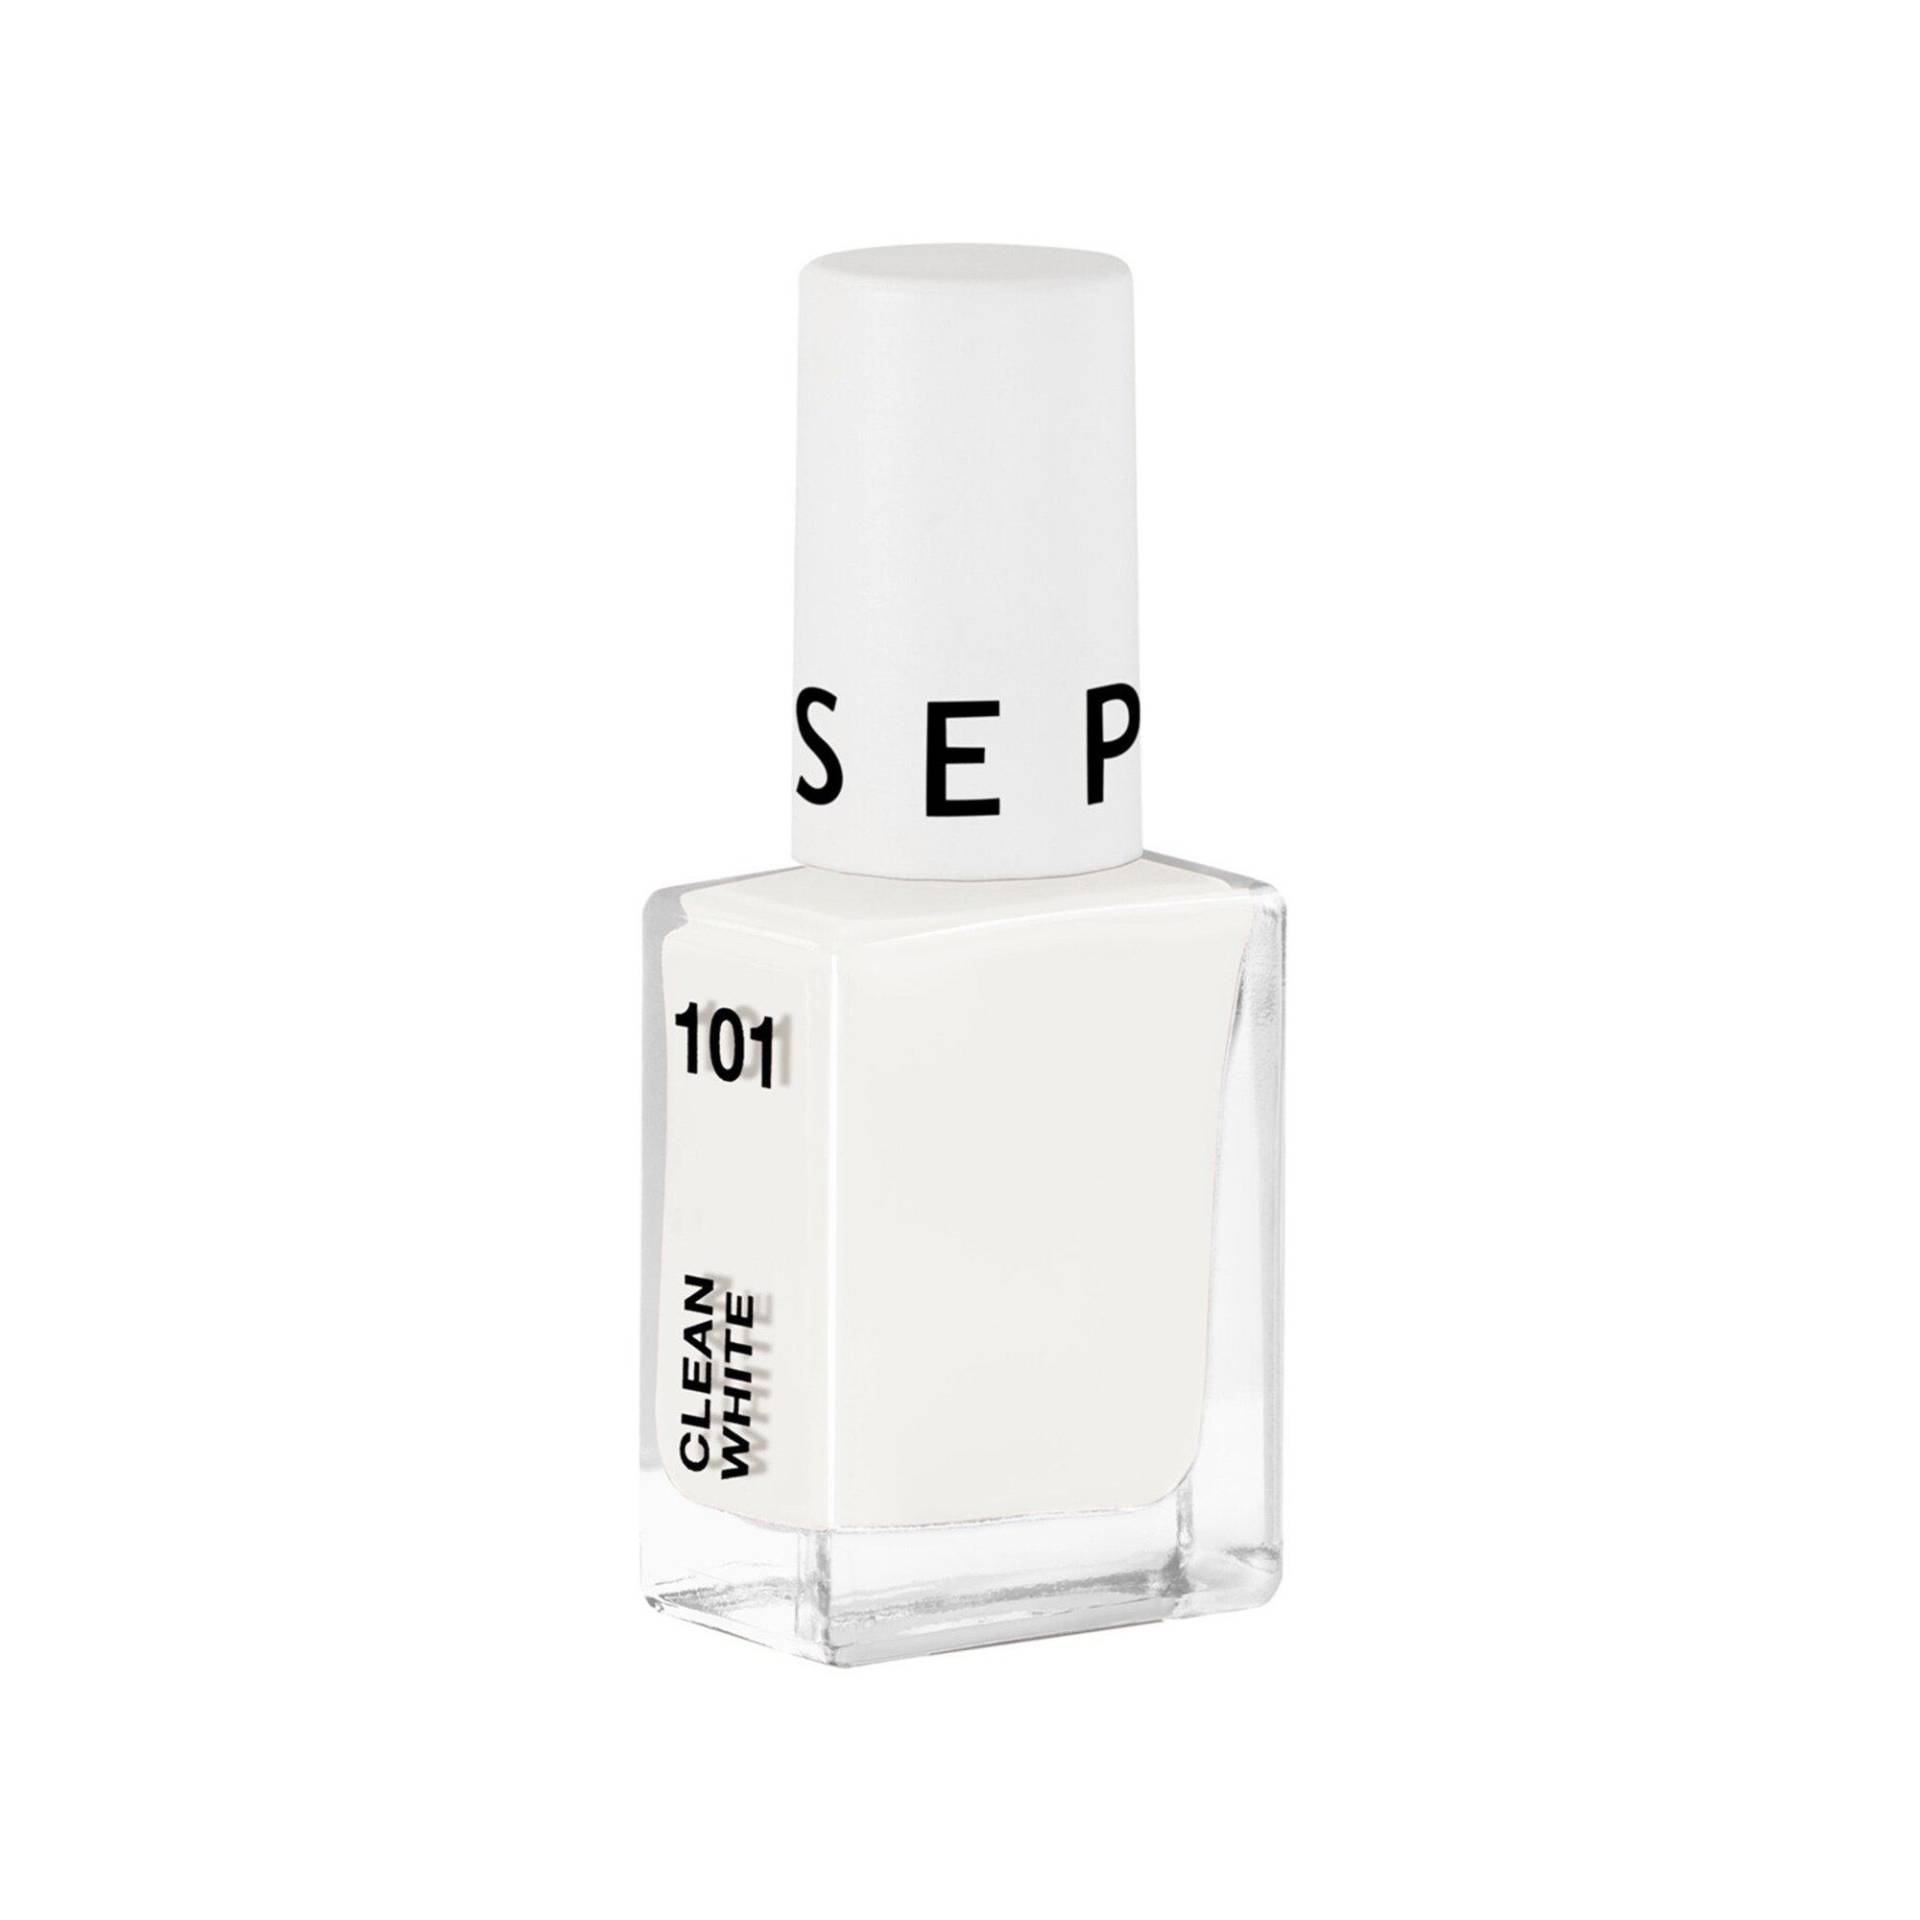 Nail Polish - Nagellack Damen  Clean White  6.5ml von SEPHORA